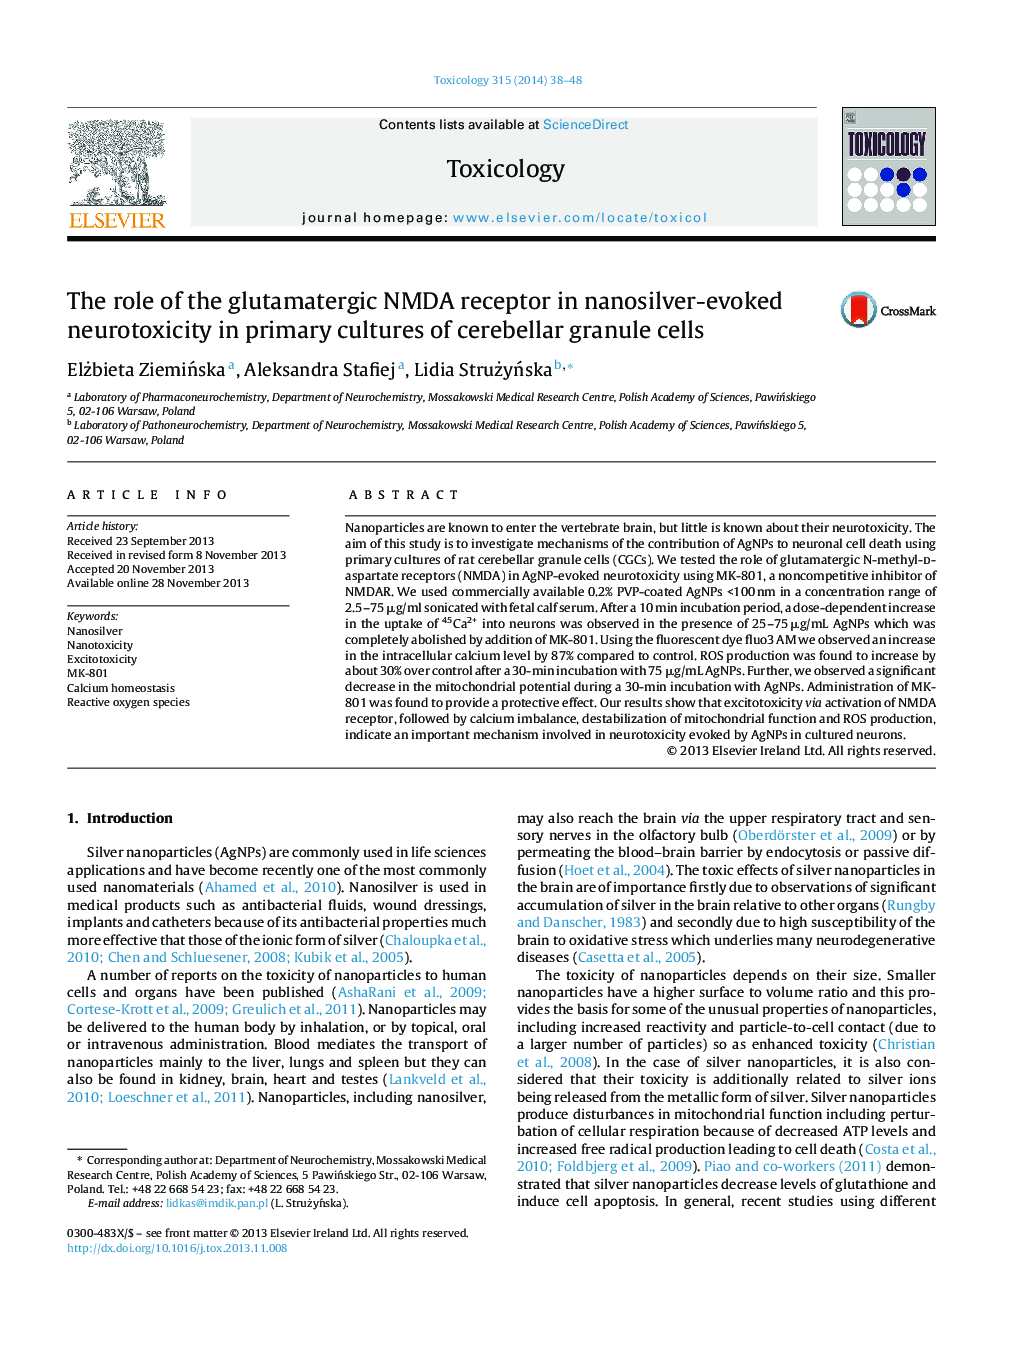 The role of the glutamatergic NMDA receptor in nanosilver-evoked neurotoxicity in primary cultures of cerebellar granule cells